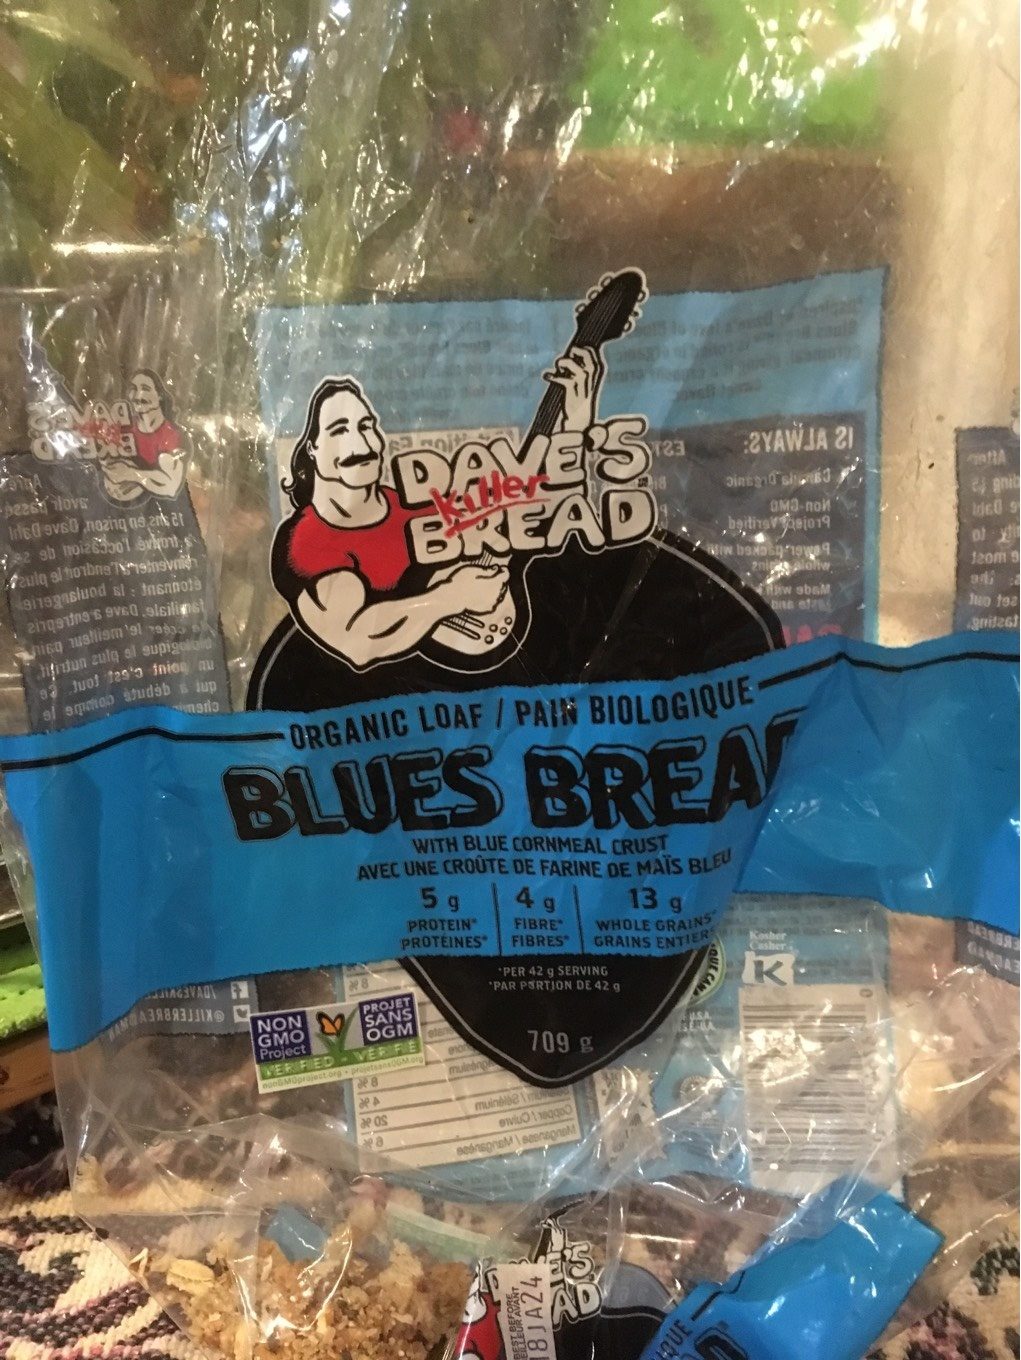 Dave's killer bread, blues bread, cornmeal crust - Product